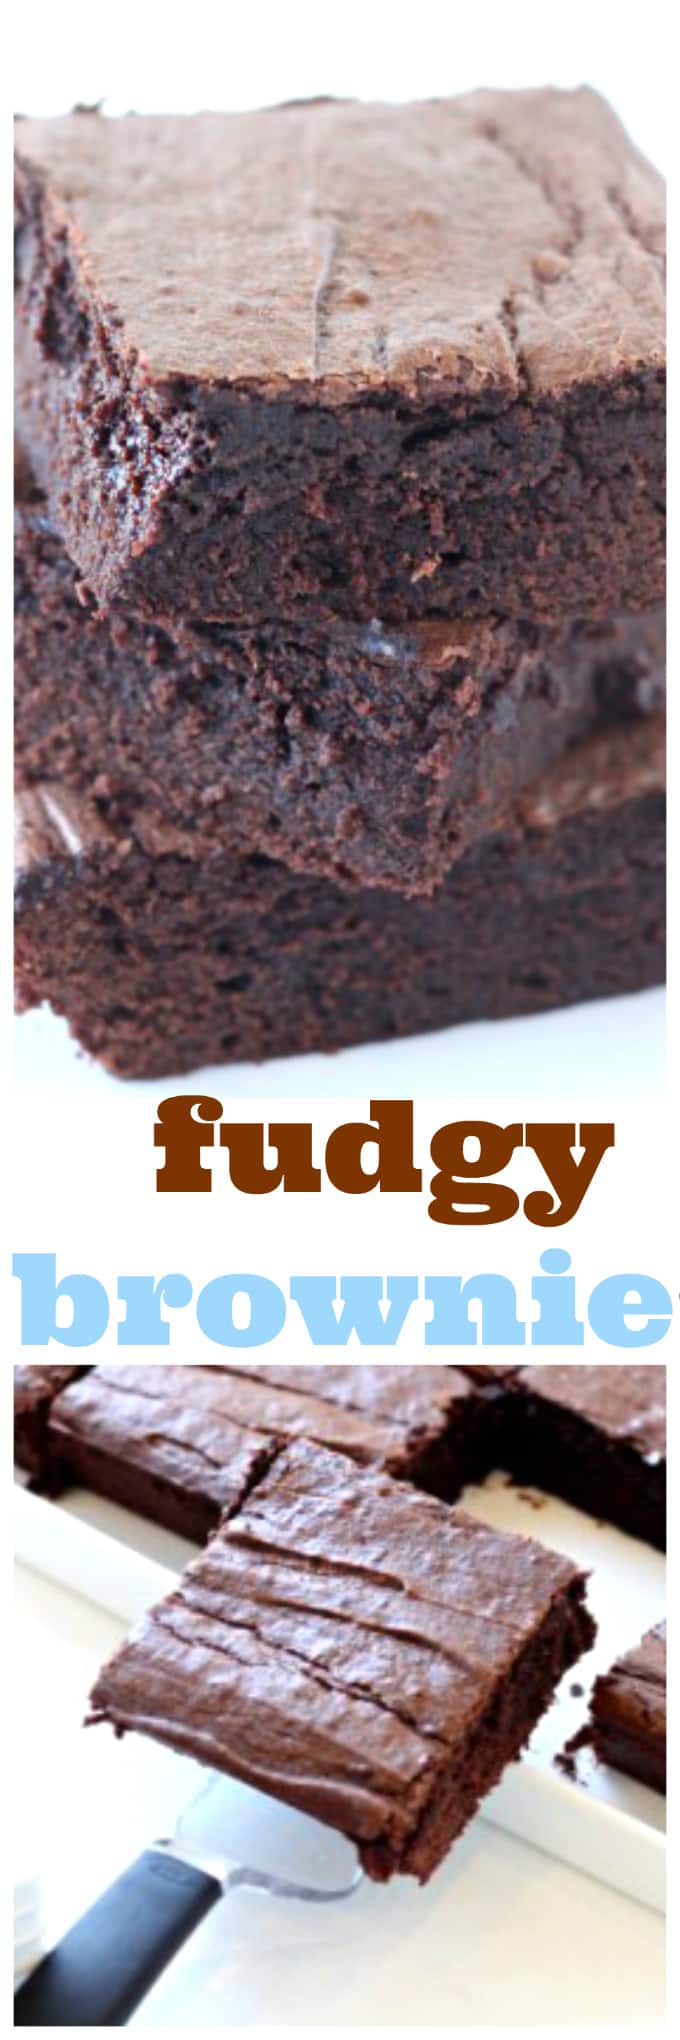 fudgy brownie recipe @createdbydiane